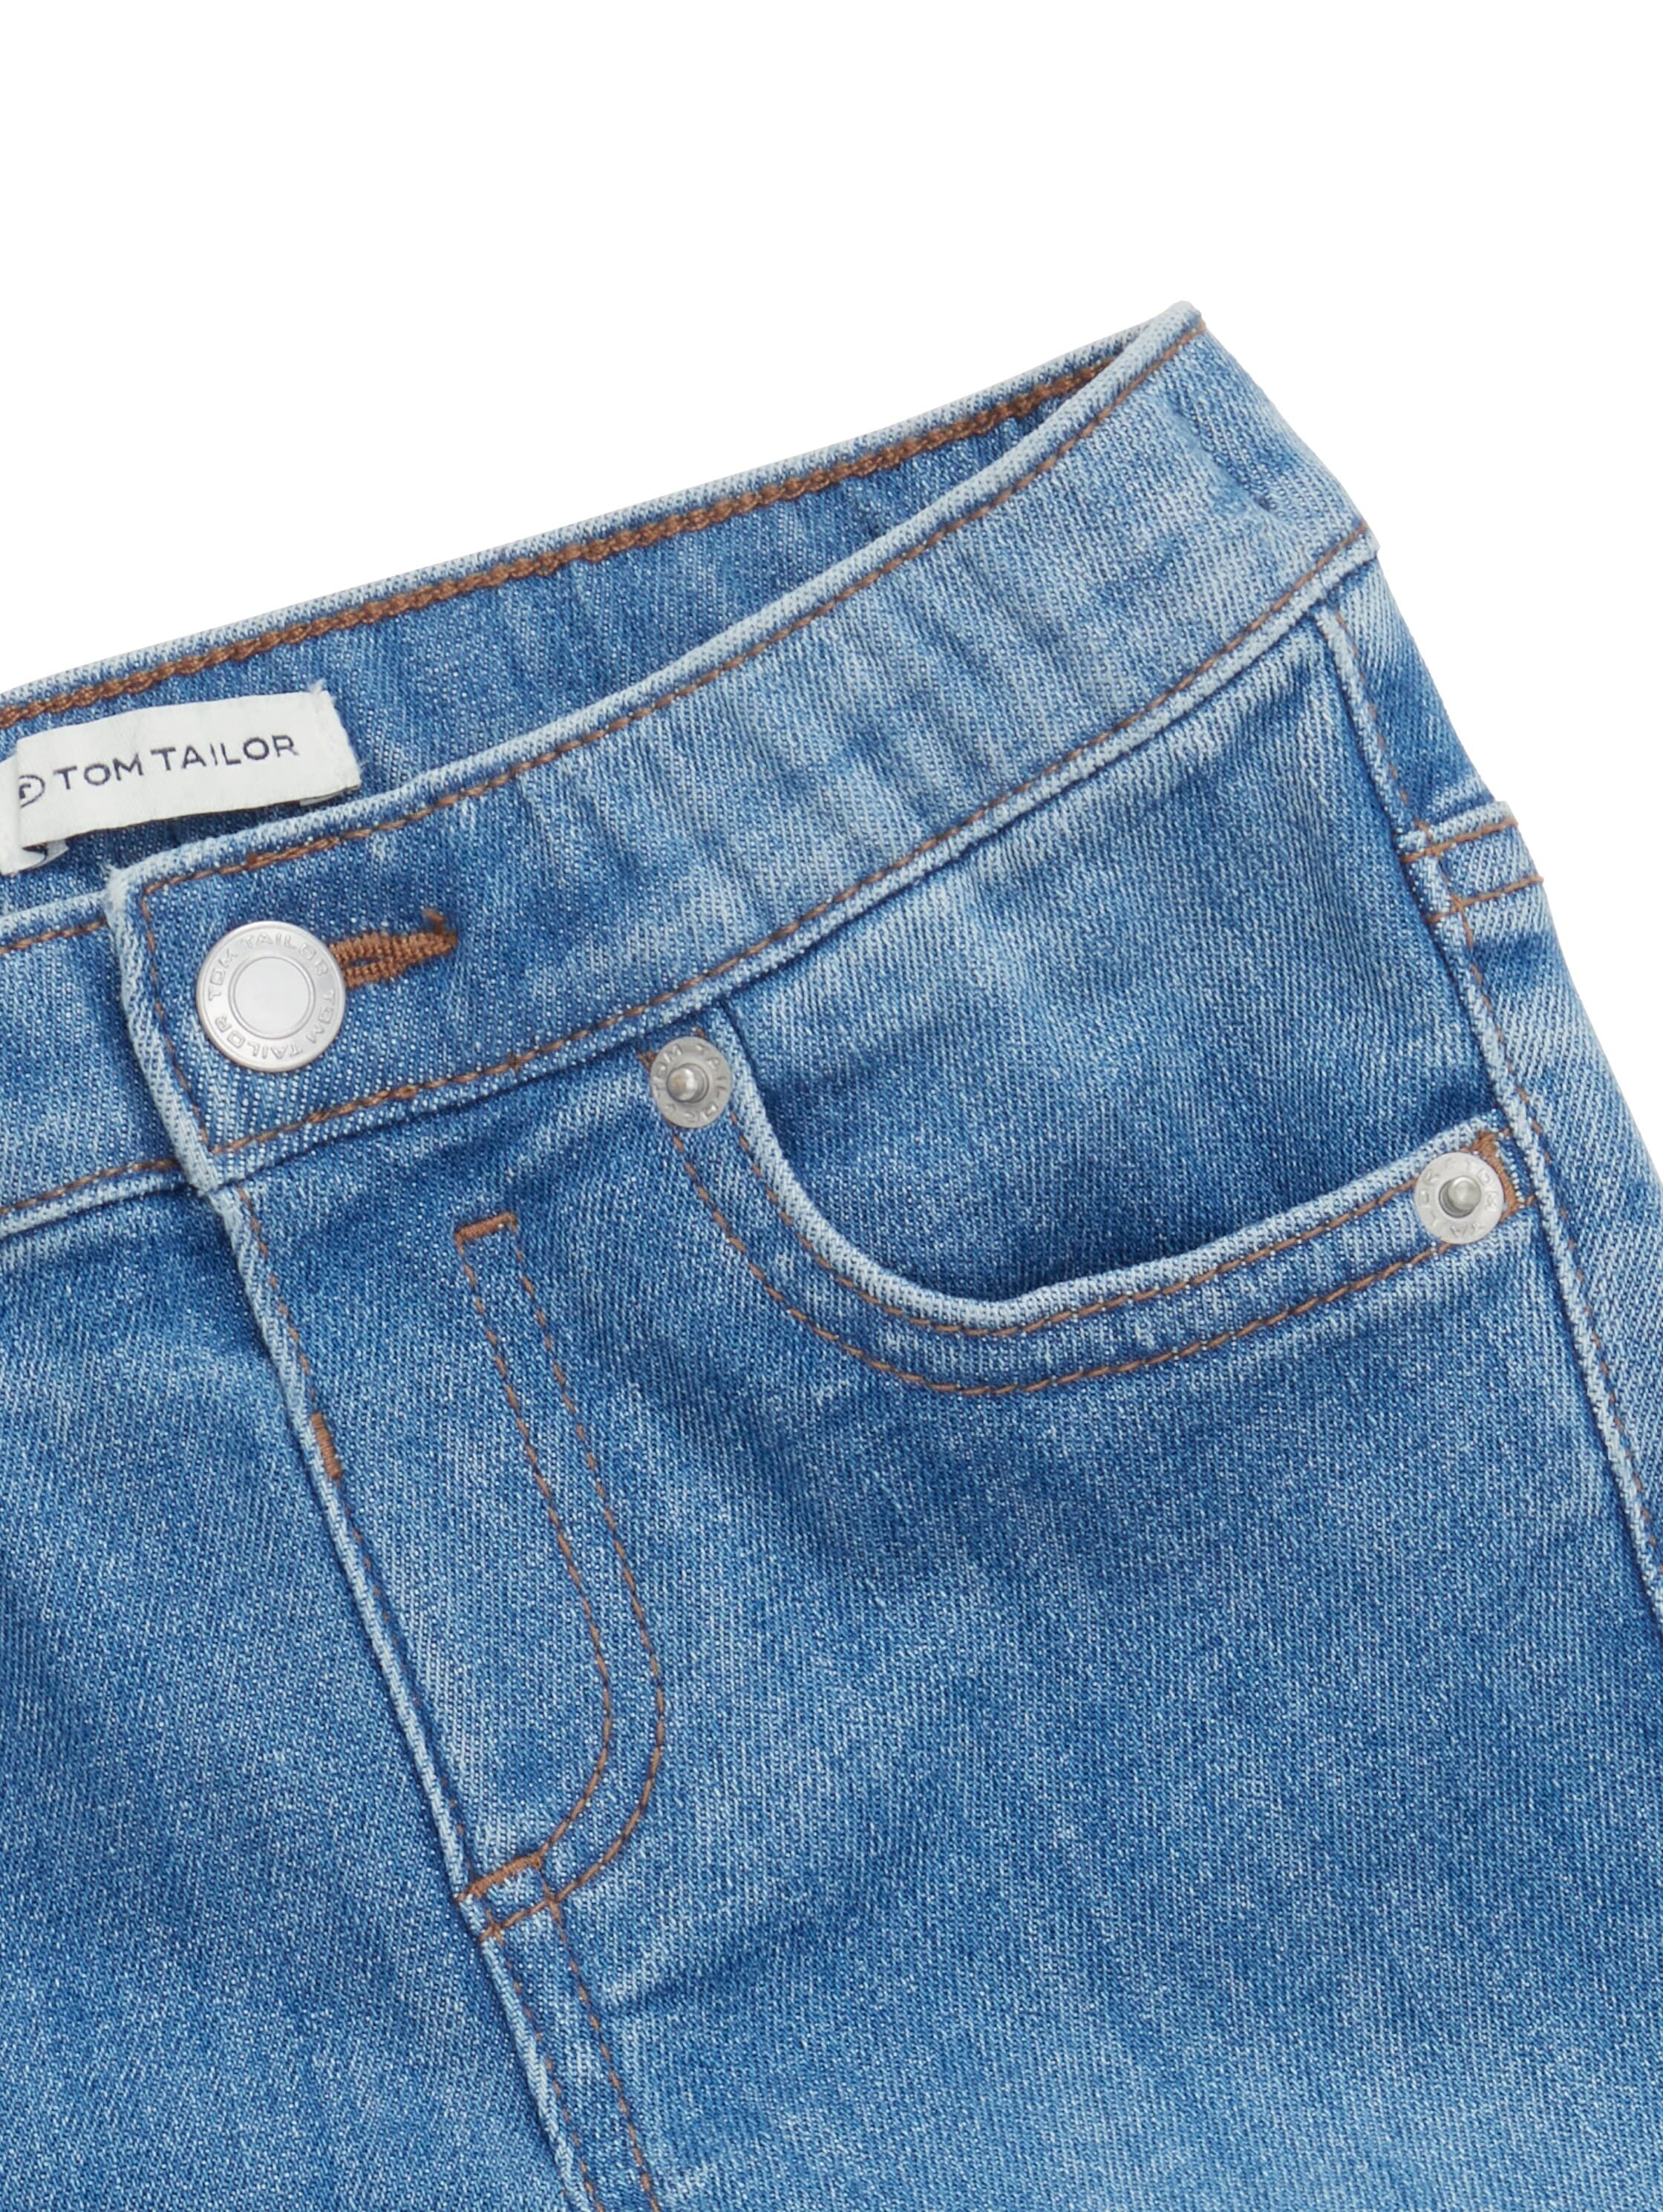 TOM TAILOR Jeansleggings, in Slim fit- Passform